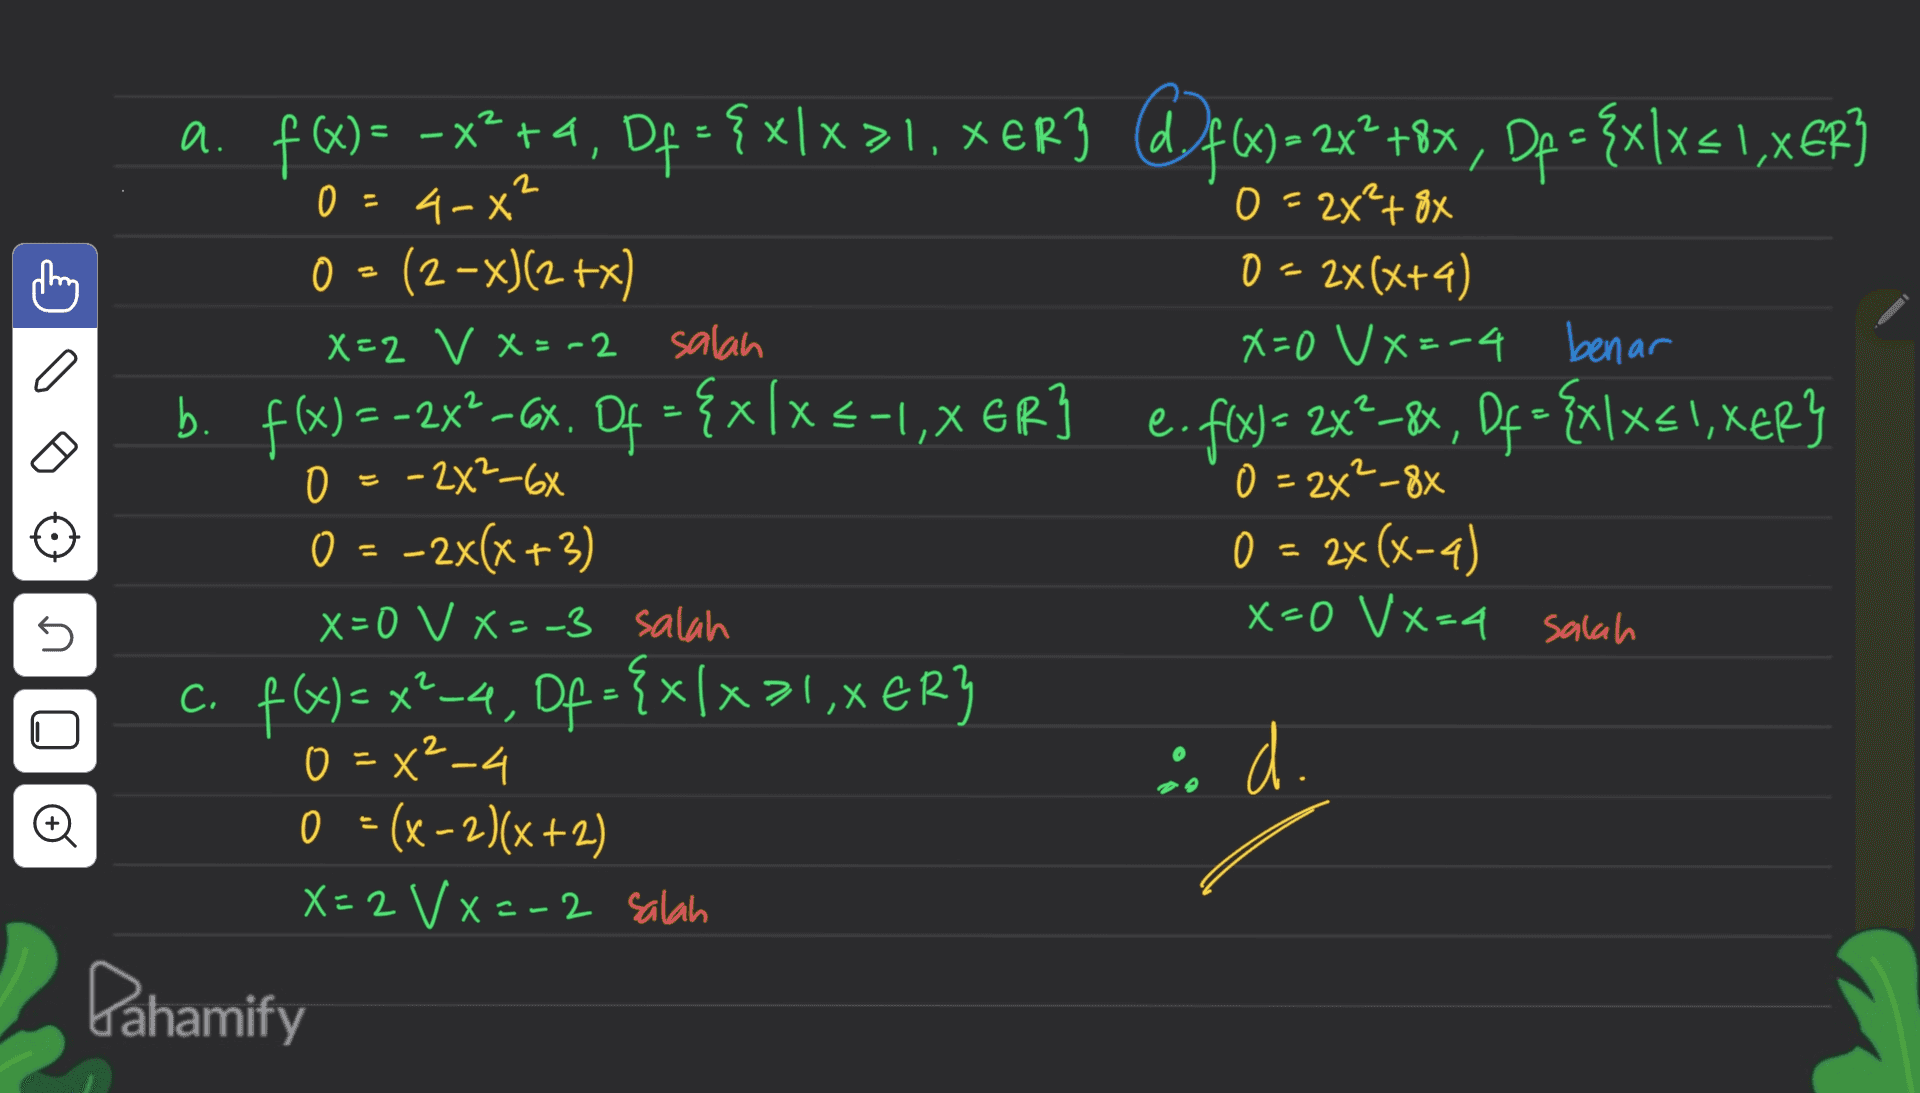 < 2 0 - + a. f@= -x2 +4, Df = { xlx>1, xer3 df6)-2x+8x, Dp = {xlx= 1,XEP} )XER3 . ( = 4-x" 0 = 2*²+ 8x 2X² o 0 = (2-x)(2+x) () 0 = 2x(x+4) X=2 V X=-2 salah X=0 VX=-4 benar b. f(x) = 2x2 - 6x. Of = {x[x = -1,XER] e. f(x) = 2x_8x, Of = {xx51, XER} -2 , 0 = -282-6X - 0 = 2x²_88 0 = -2x(x+3) 0 = 2x(x-4) (x-4 X=0 V X=-3 salah x=0 Vx=4 salah c. f(x) = x²-4, Of = {x/x>1,XER} {x31 x 0 = x2-4 id. 0 = (x-2)(x+2) X=2 VX=-2 salah Dahamify 5 n o 